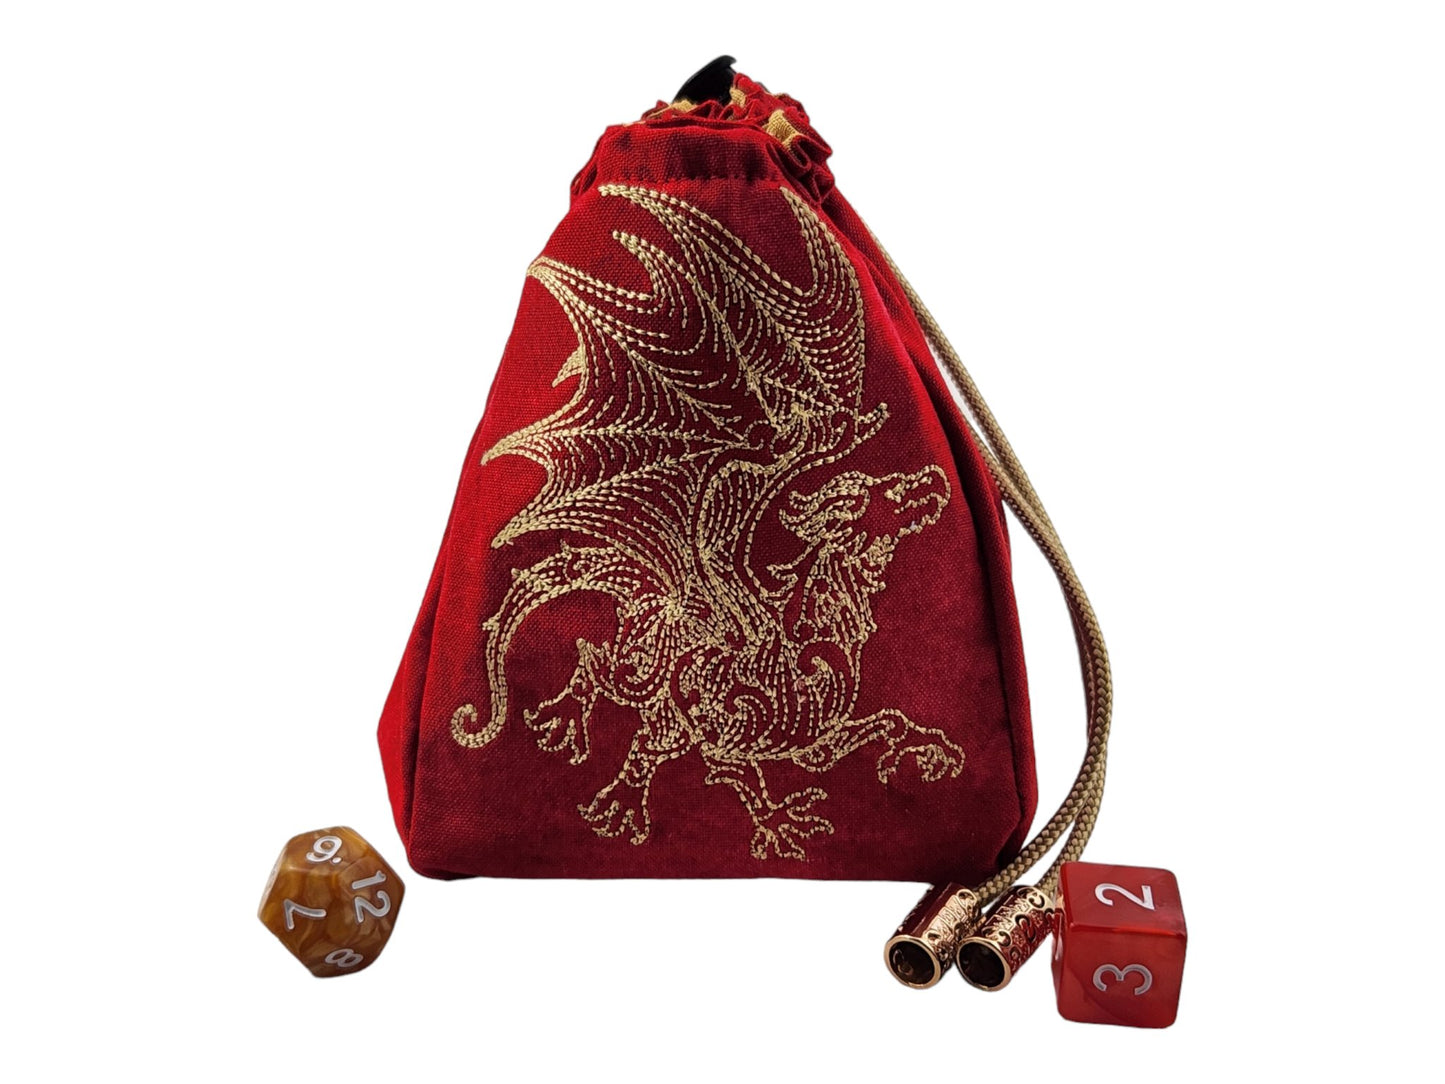 Golden dragon dice bag - Rowan Gate